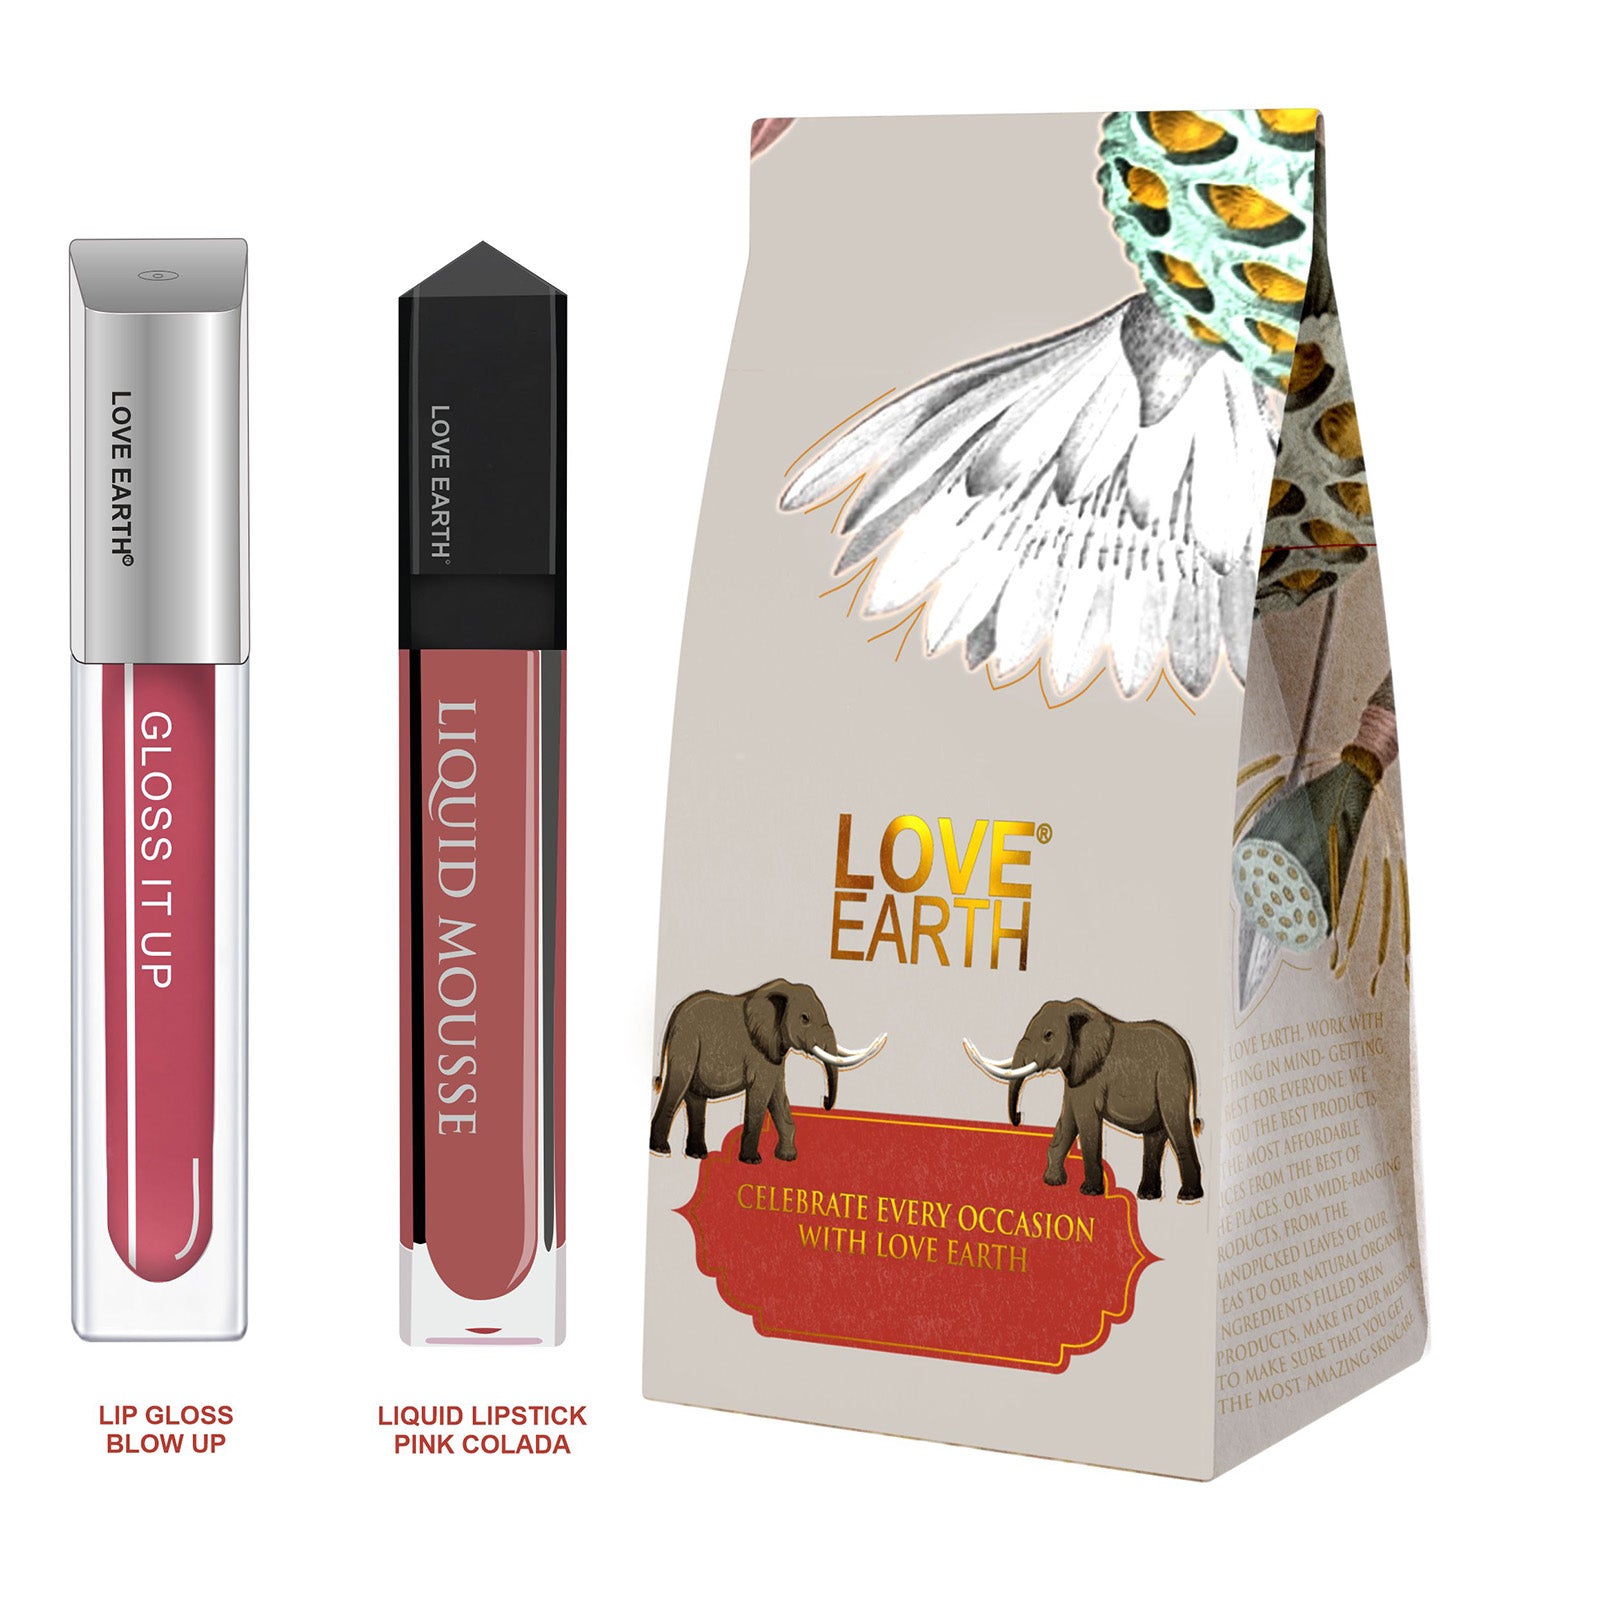 Liquid Lipstick Pink Colada & Lip Gloss Blow Up Gift Pack